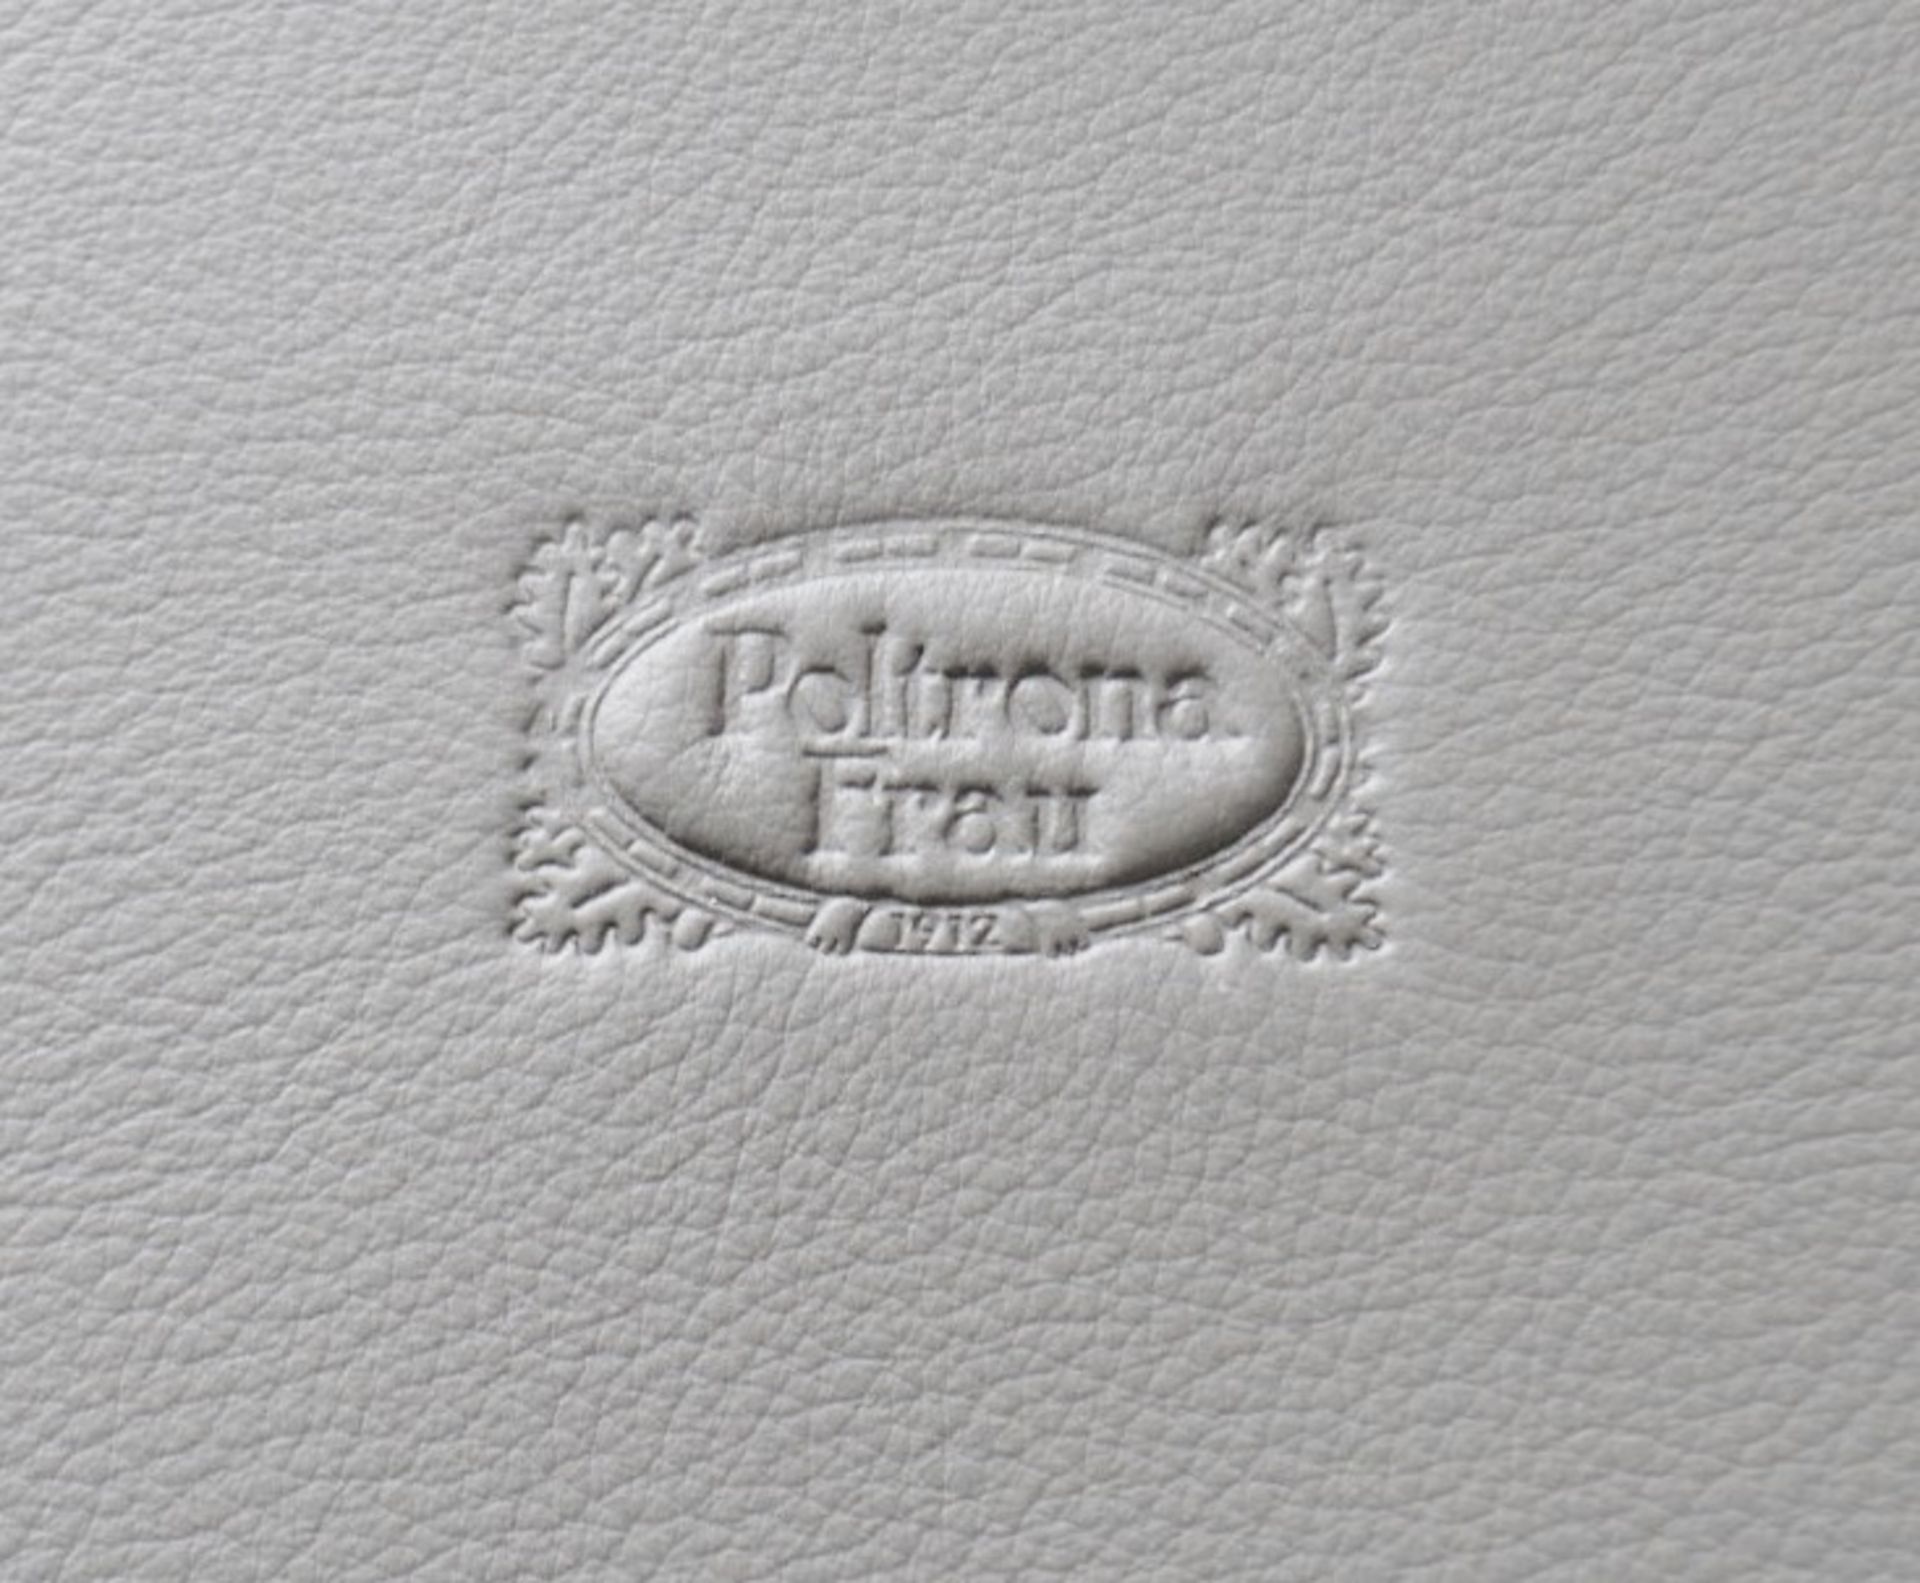 1 x POLTRONA FRAU Large 3.5 Metre Italian 3-Seat Sofa With Saddle Leather Back Rests - RRP £10,680 - Image 13 of 20